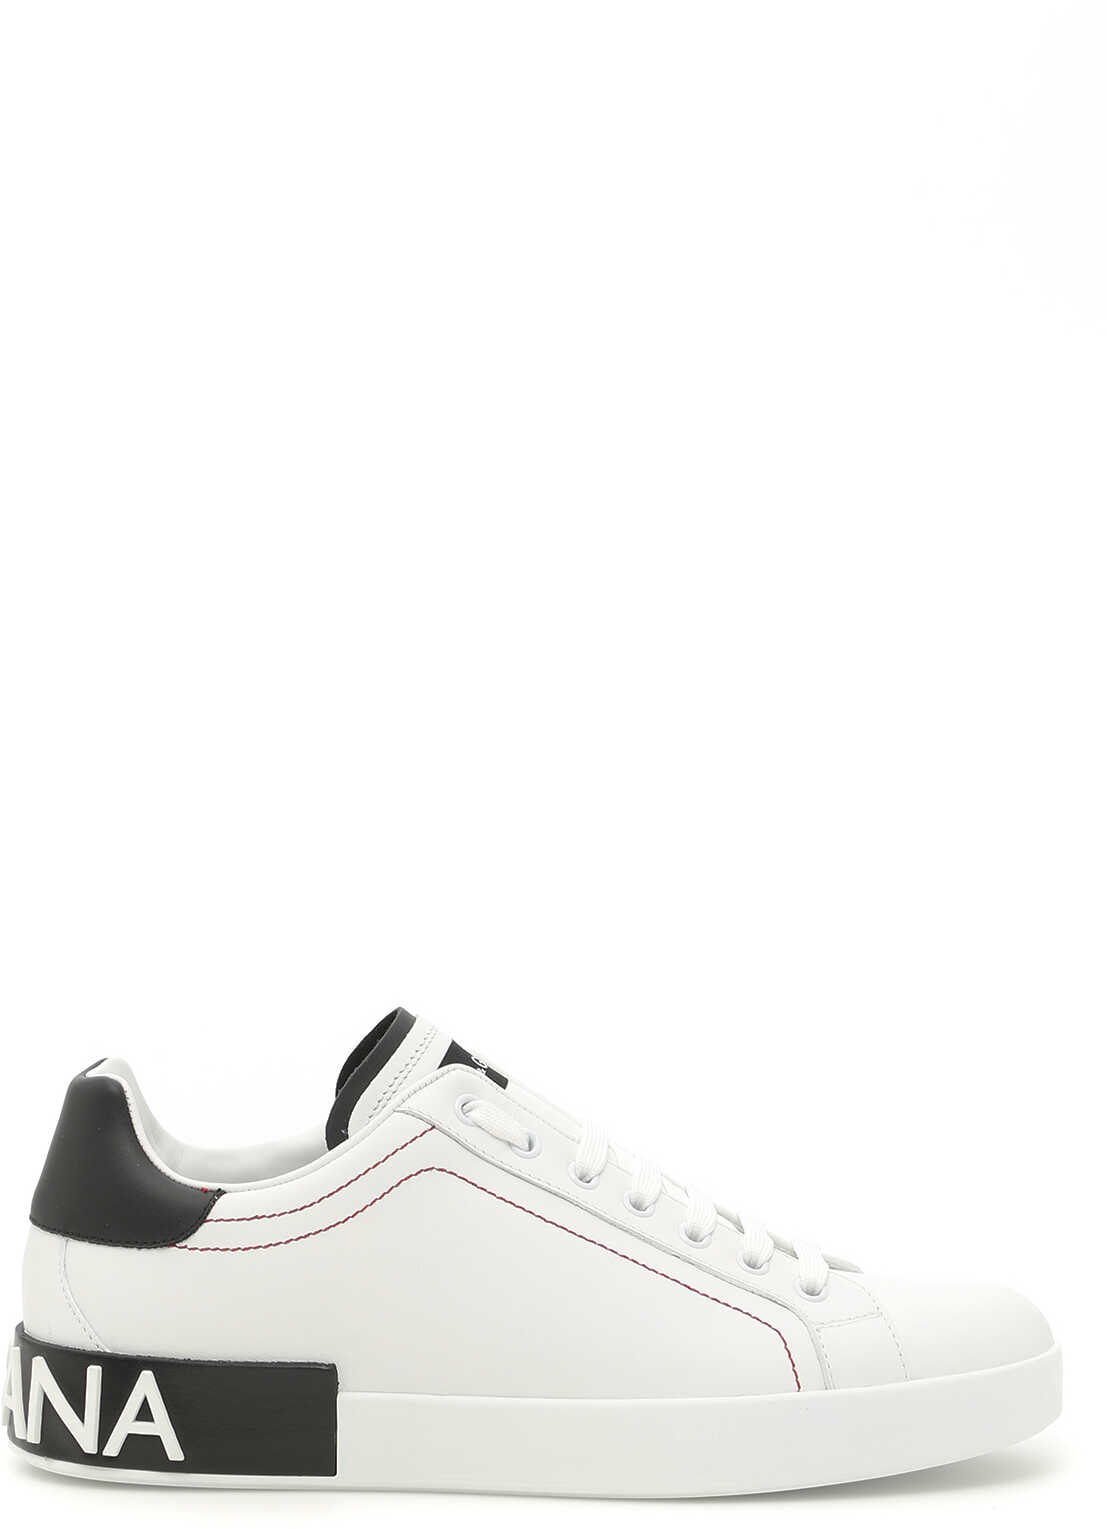 Dolce & Gabbana Portofino Nappa Leather Sneakers CS1760 AH526 BIANCO NERO